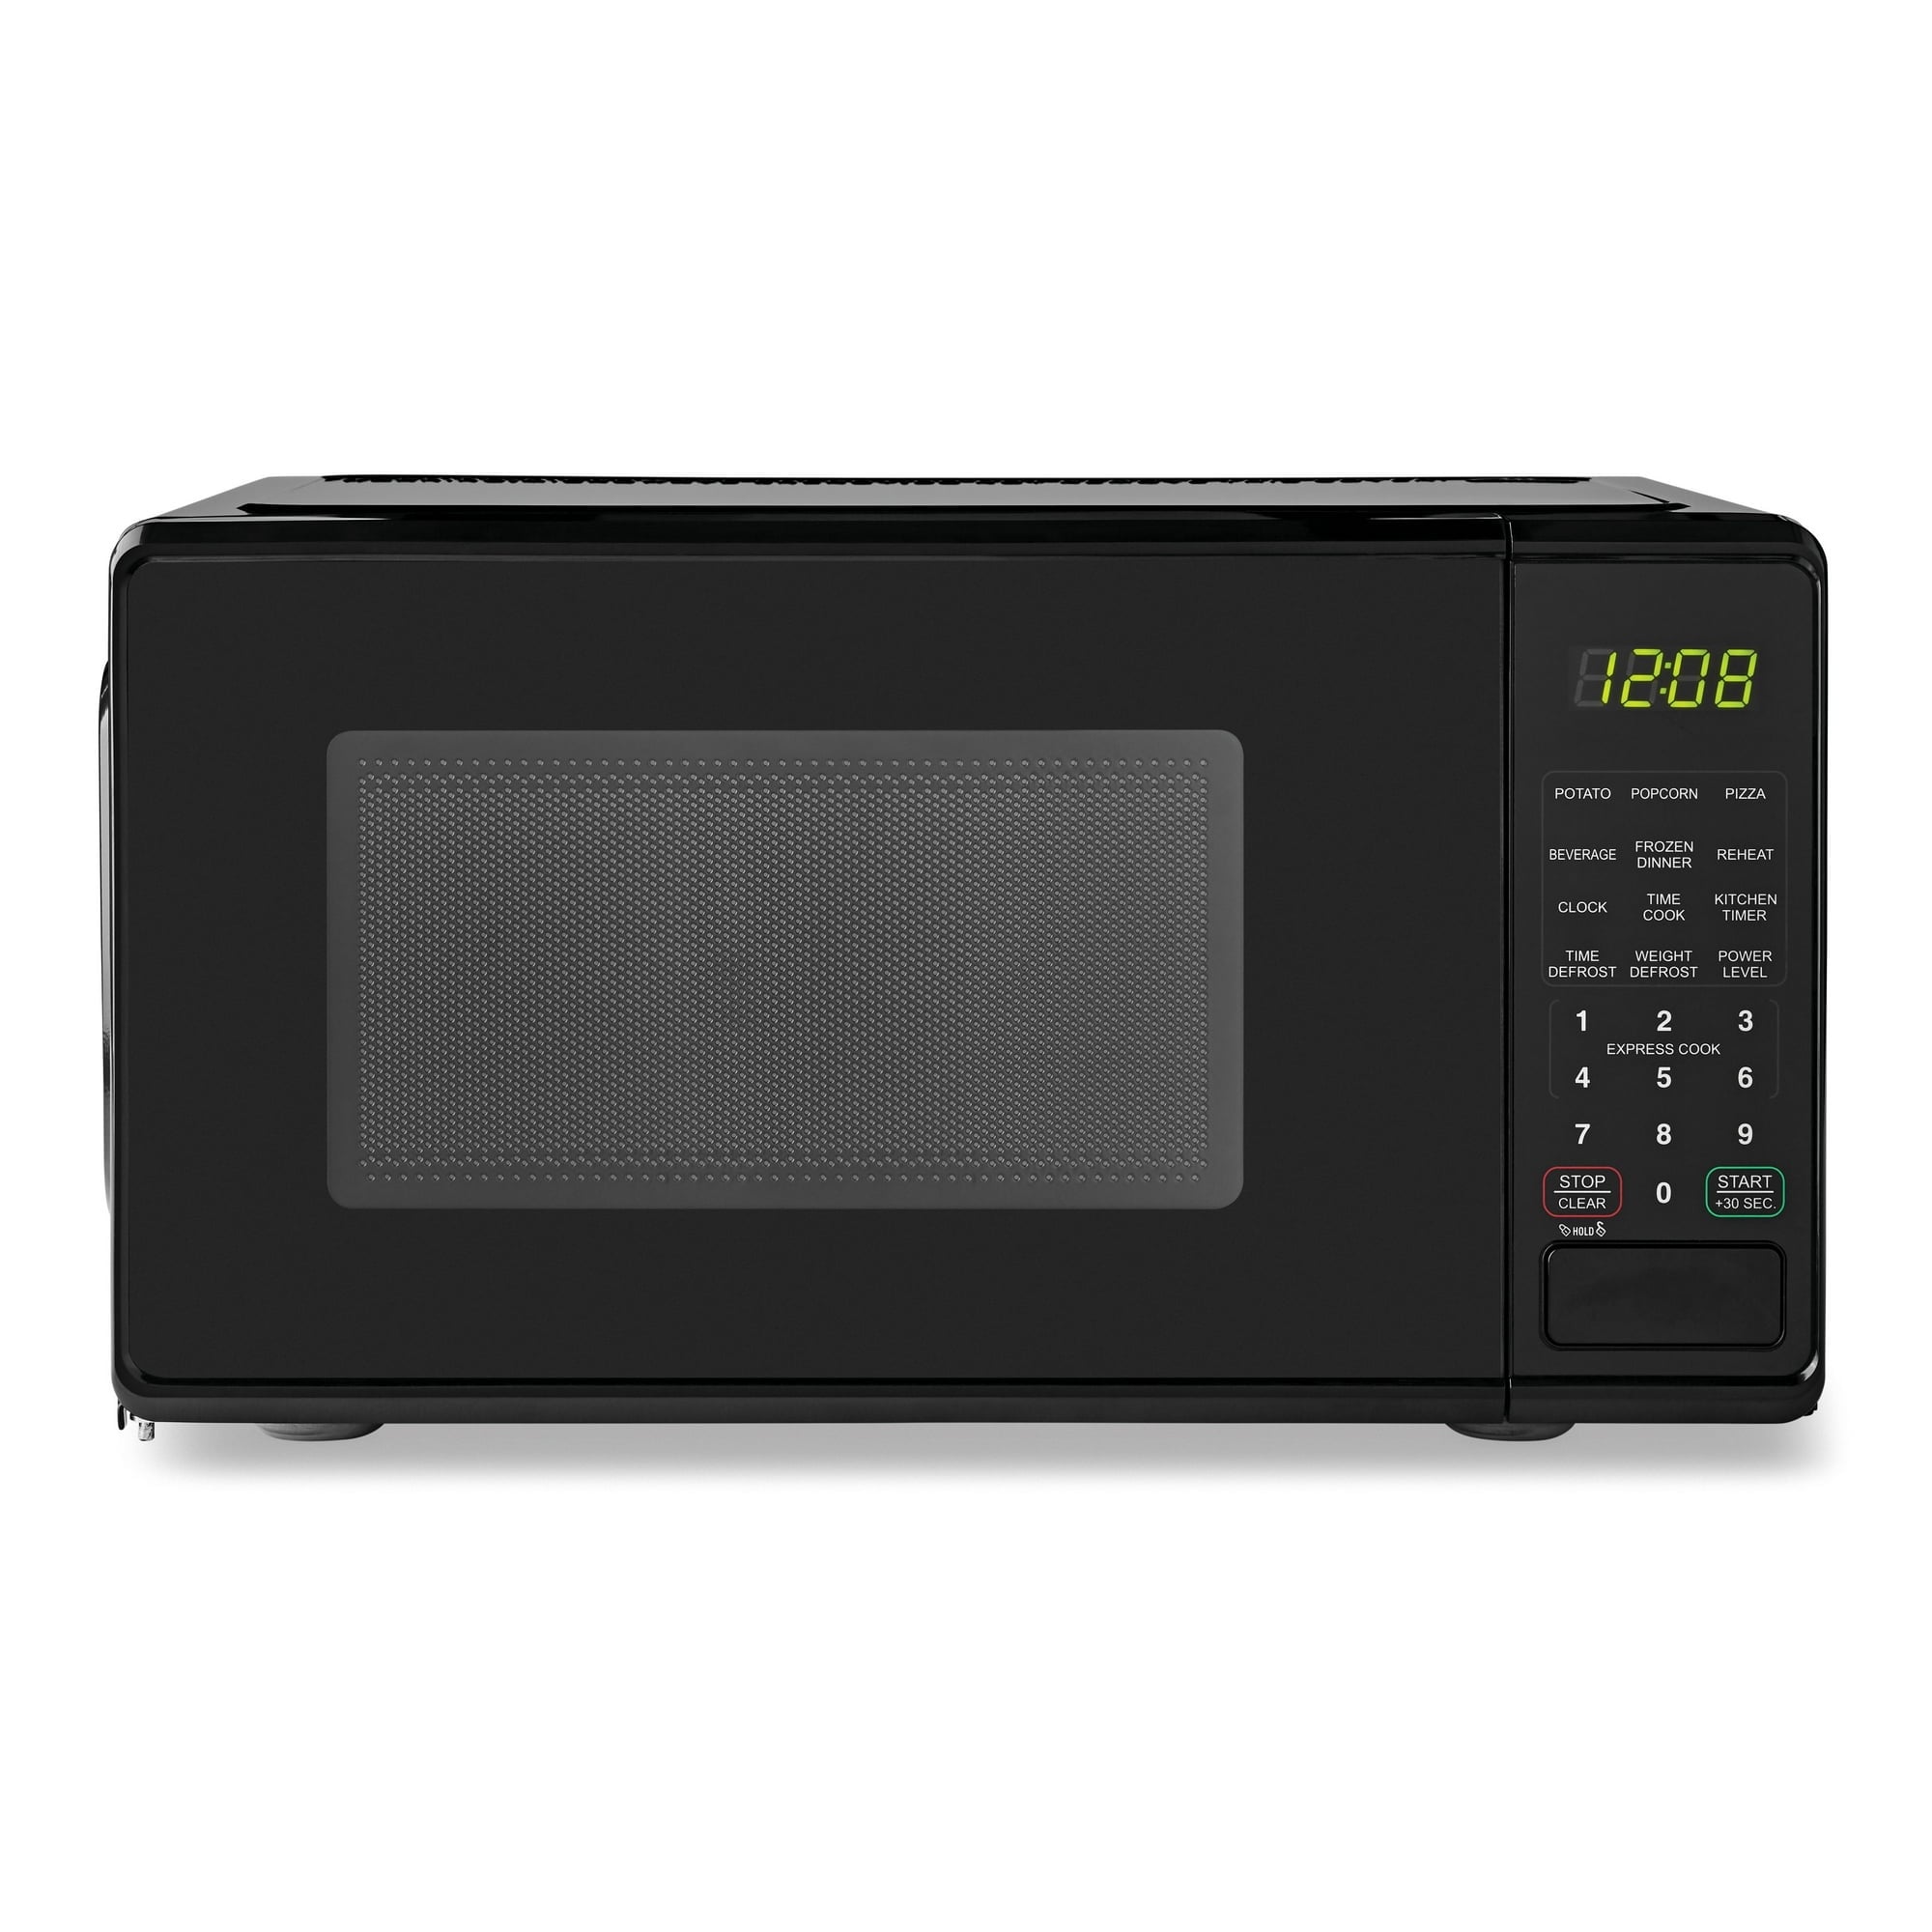 Ealdun Trade LLC 0.7 cu. ft. Countertop Microwave Oven, 700 Watts